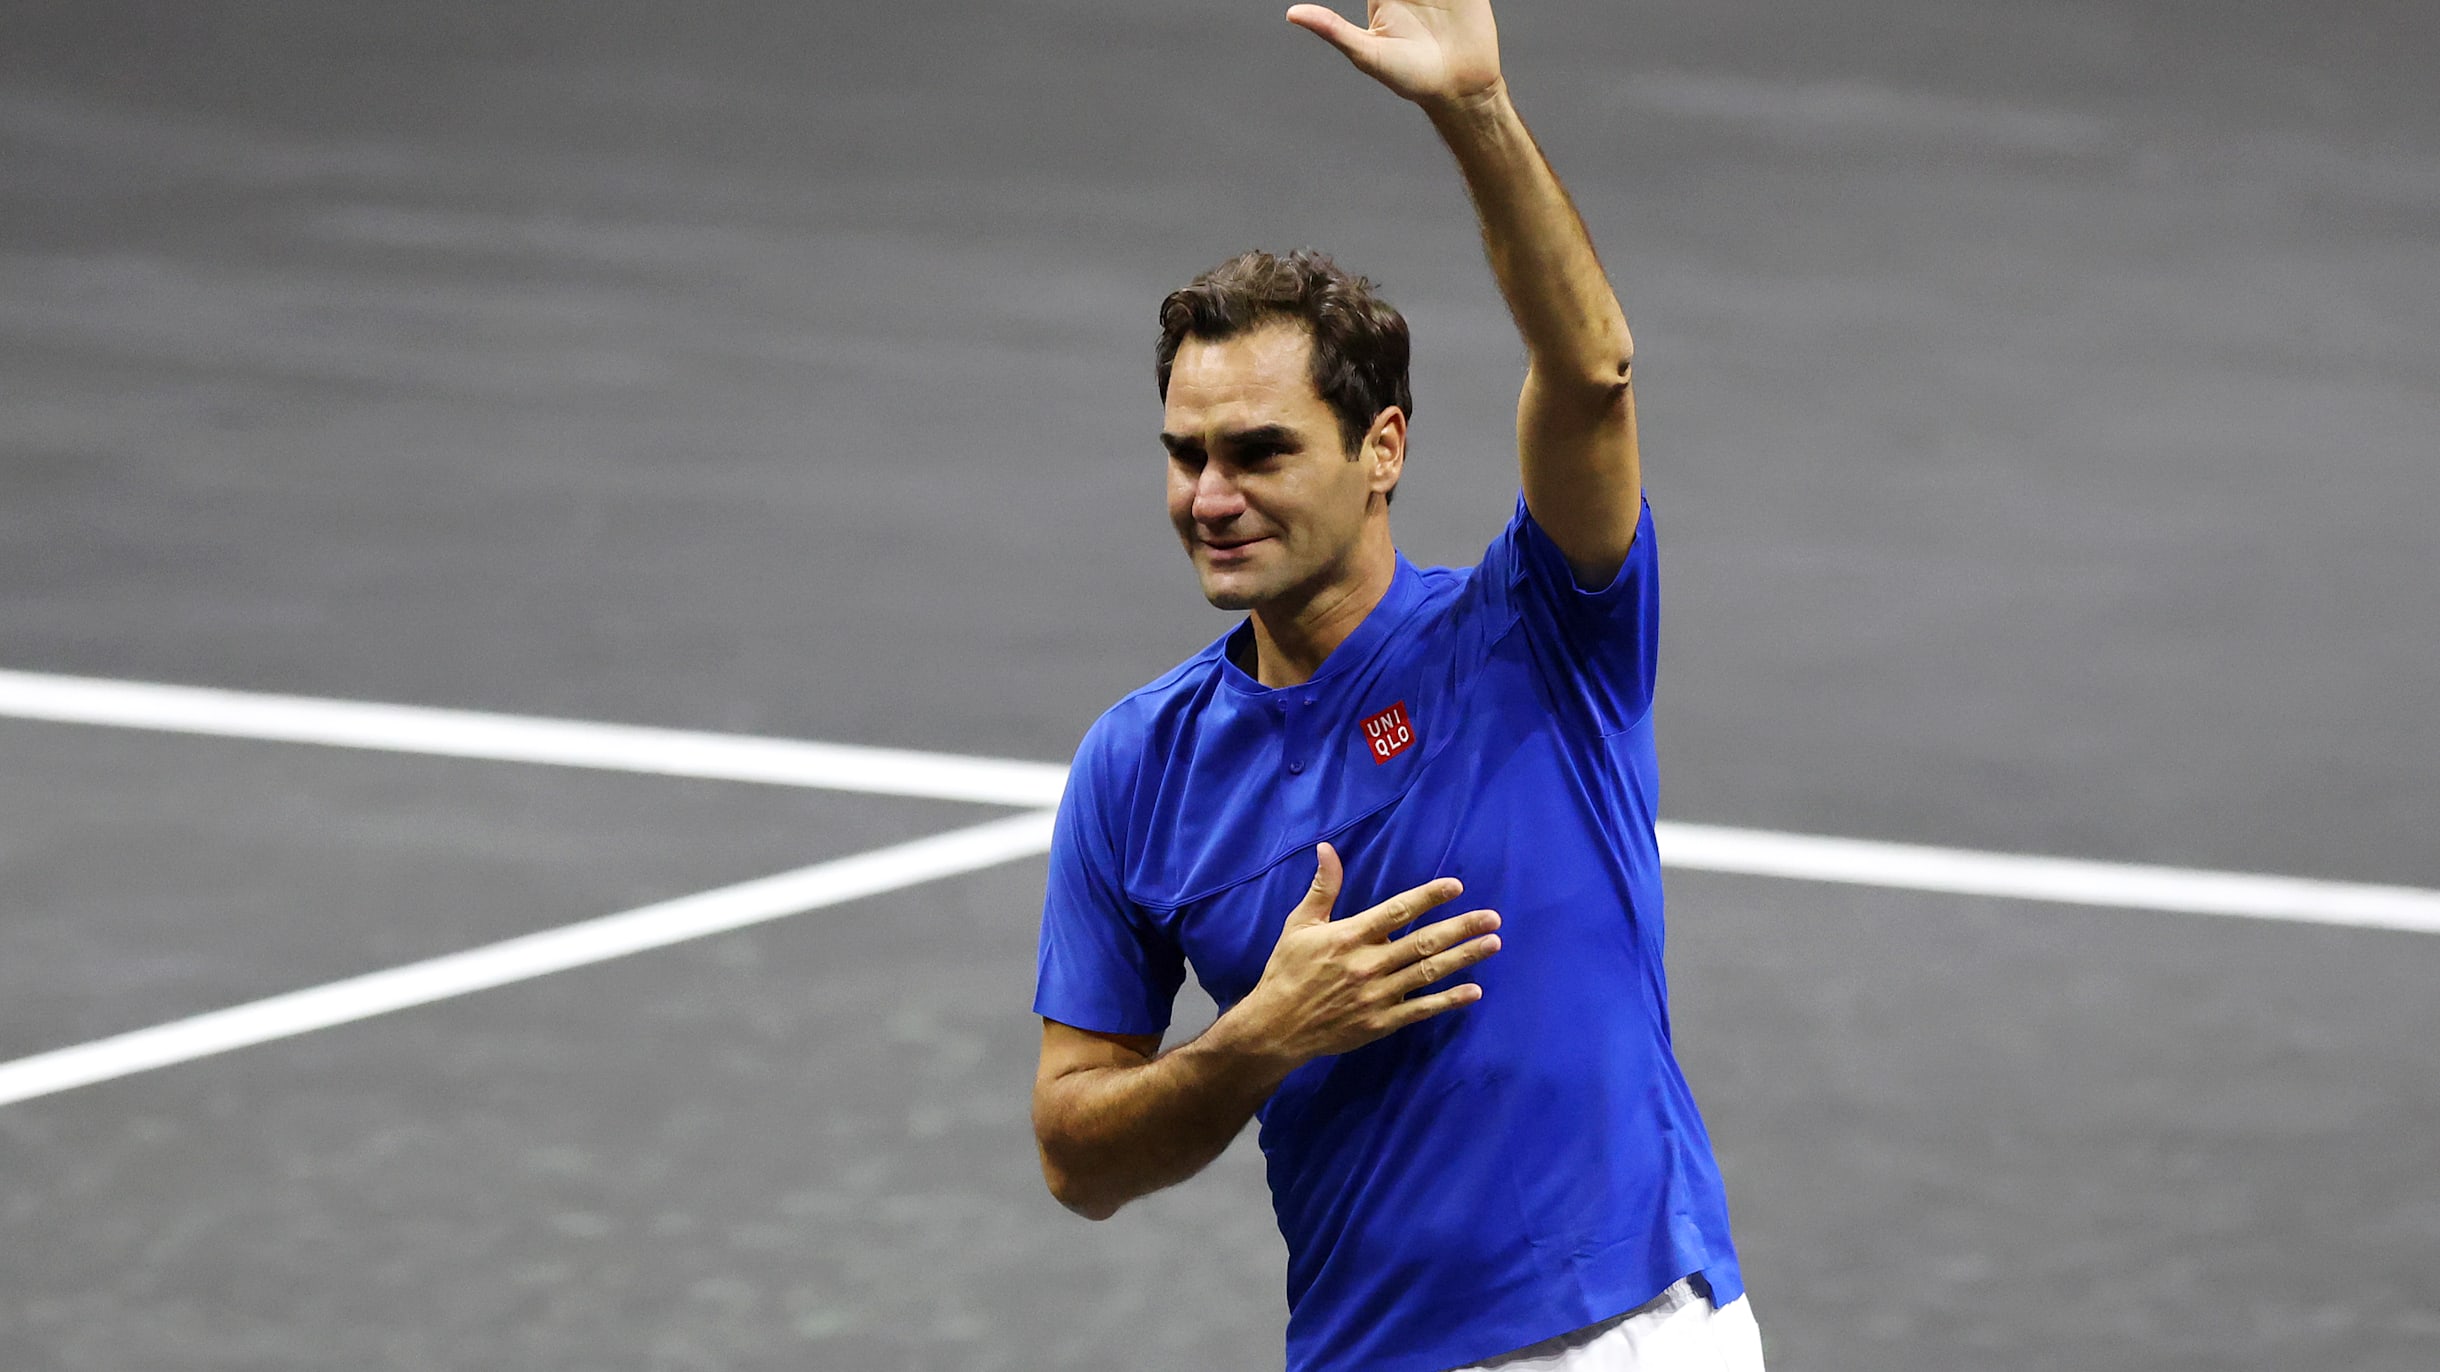 Roger Federer Reaction to tennis legends retirement